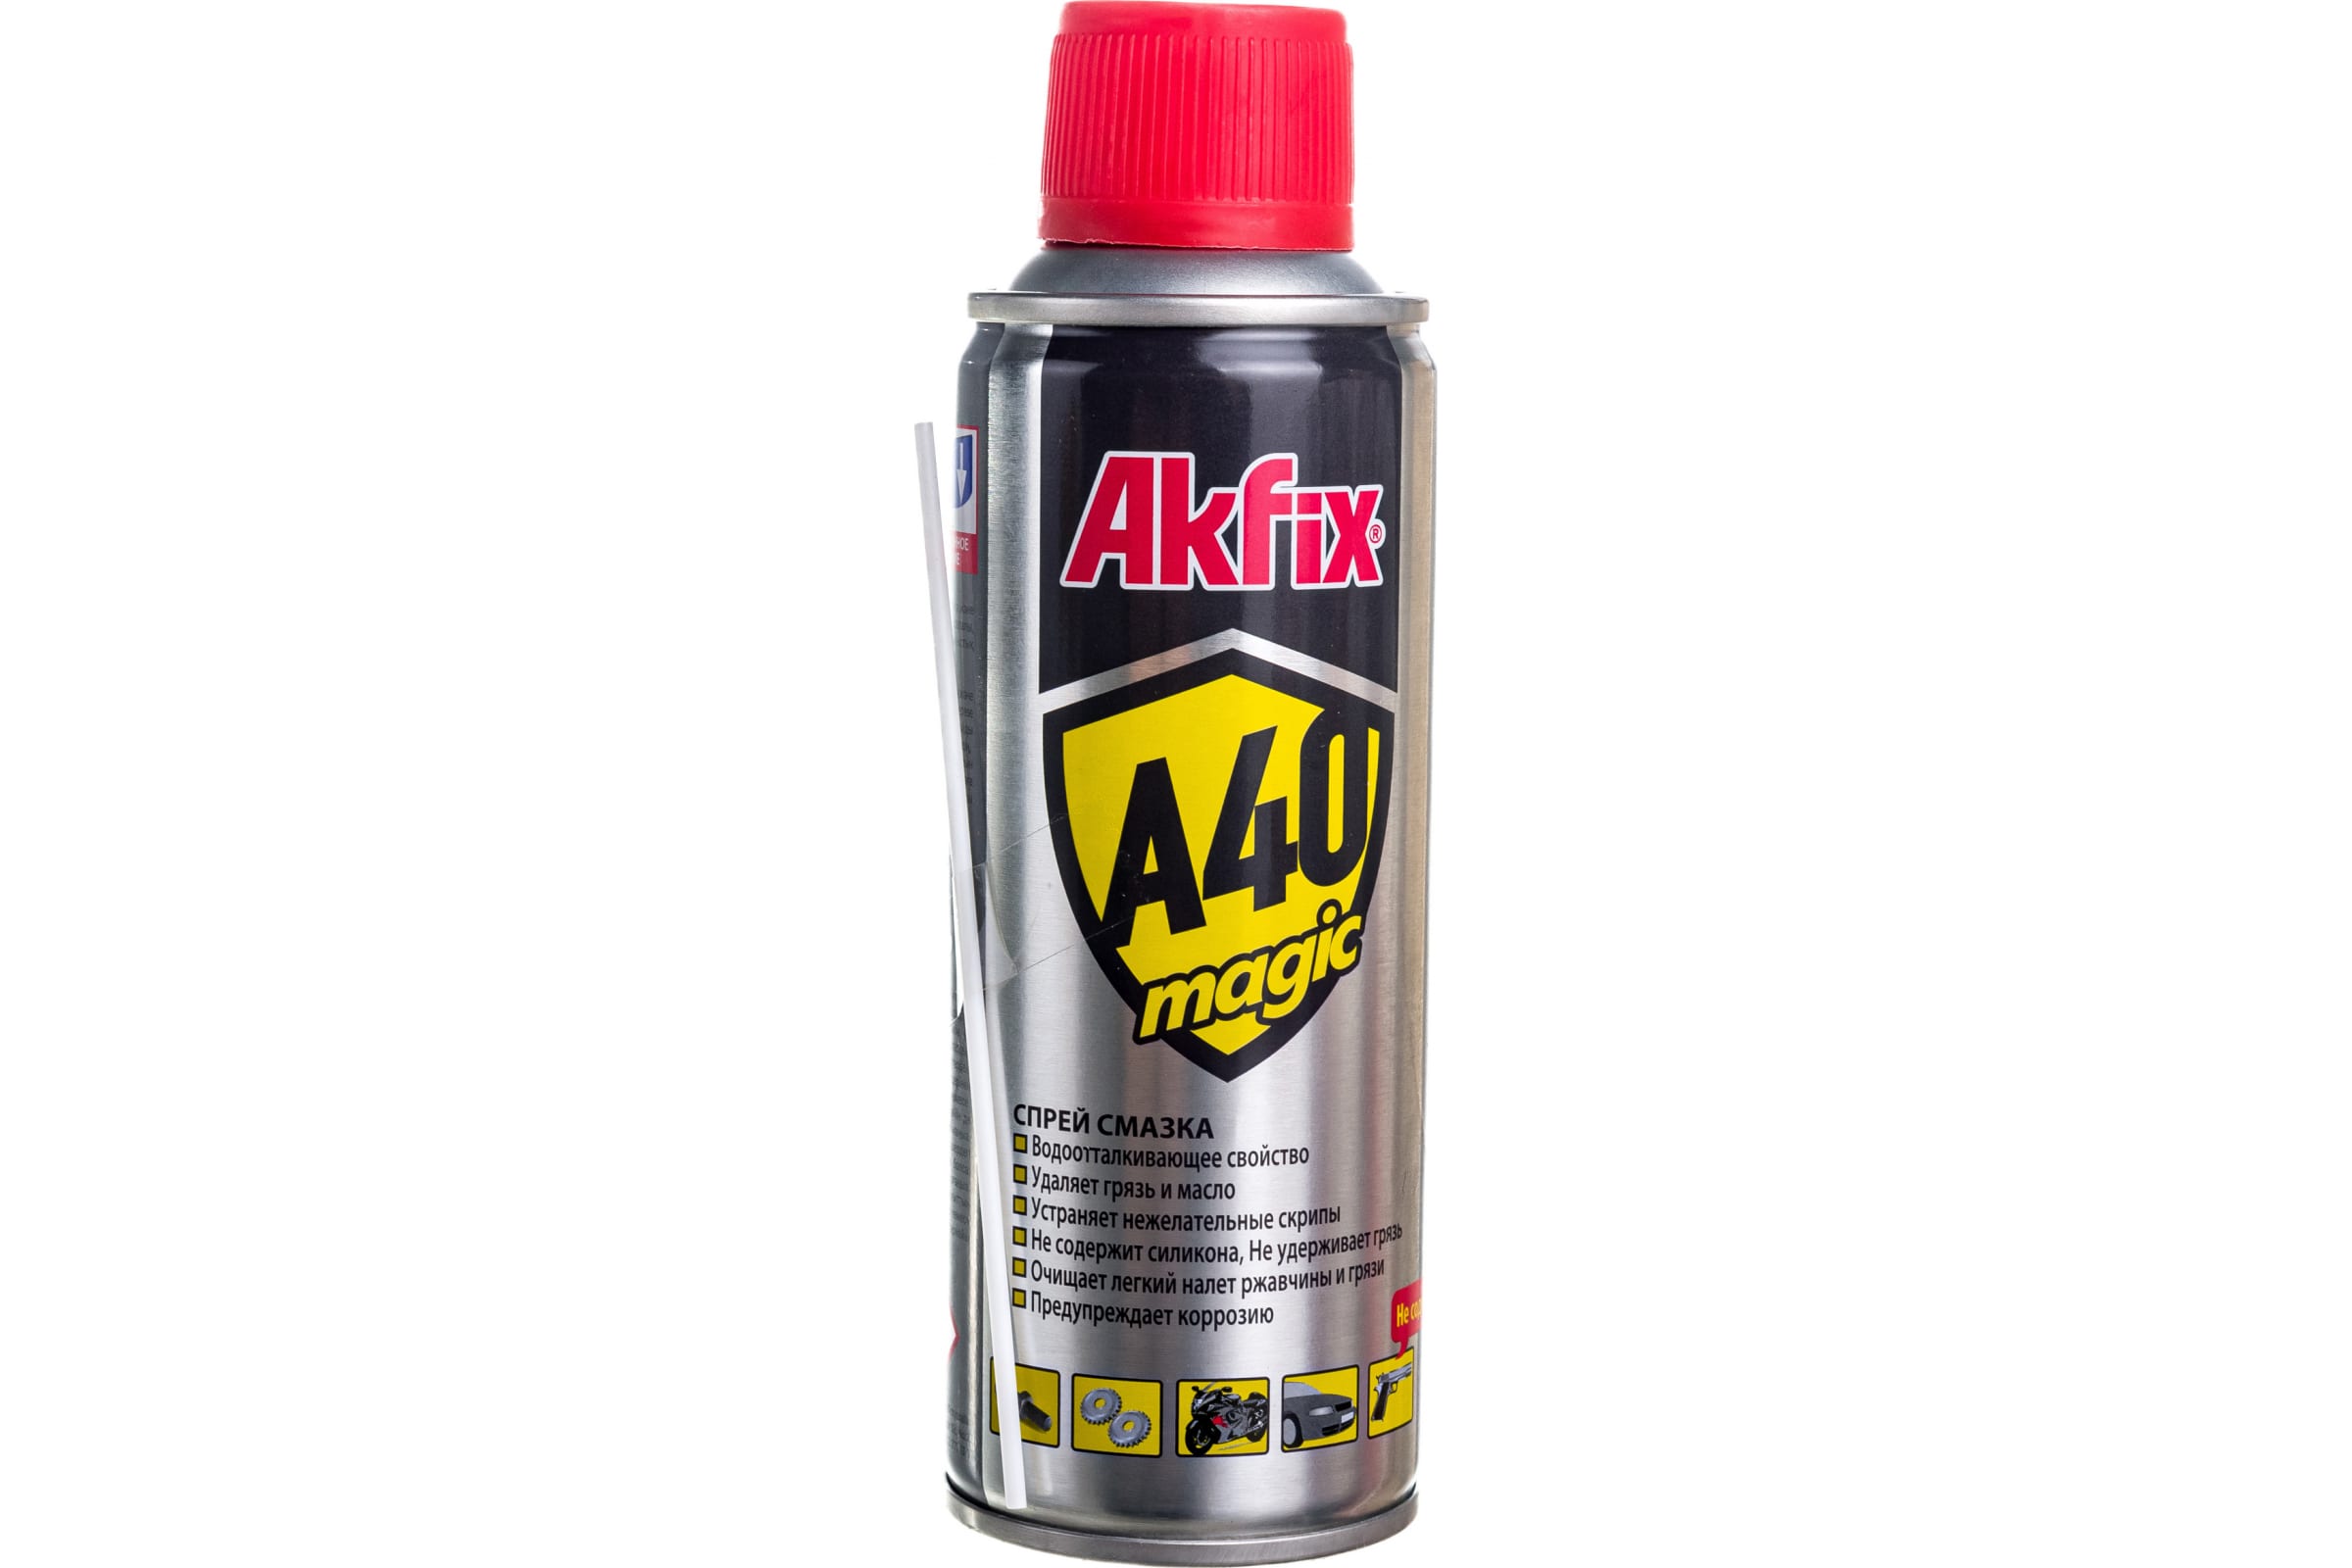 Akfix Универсальная смазка A40 Magic, 200 мл YA420 универсальная спрей смазка wurth